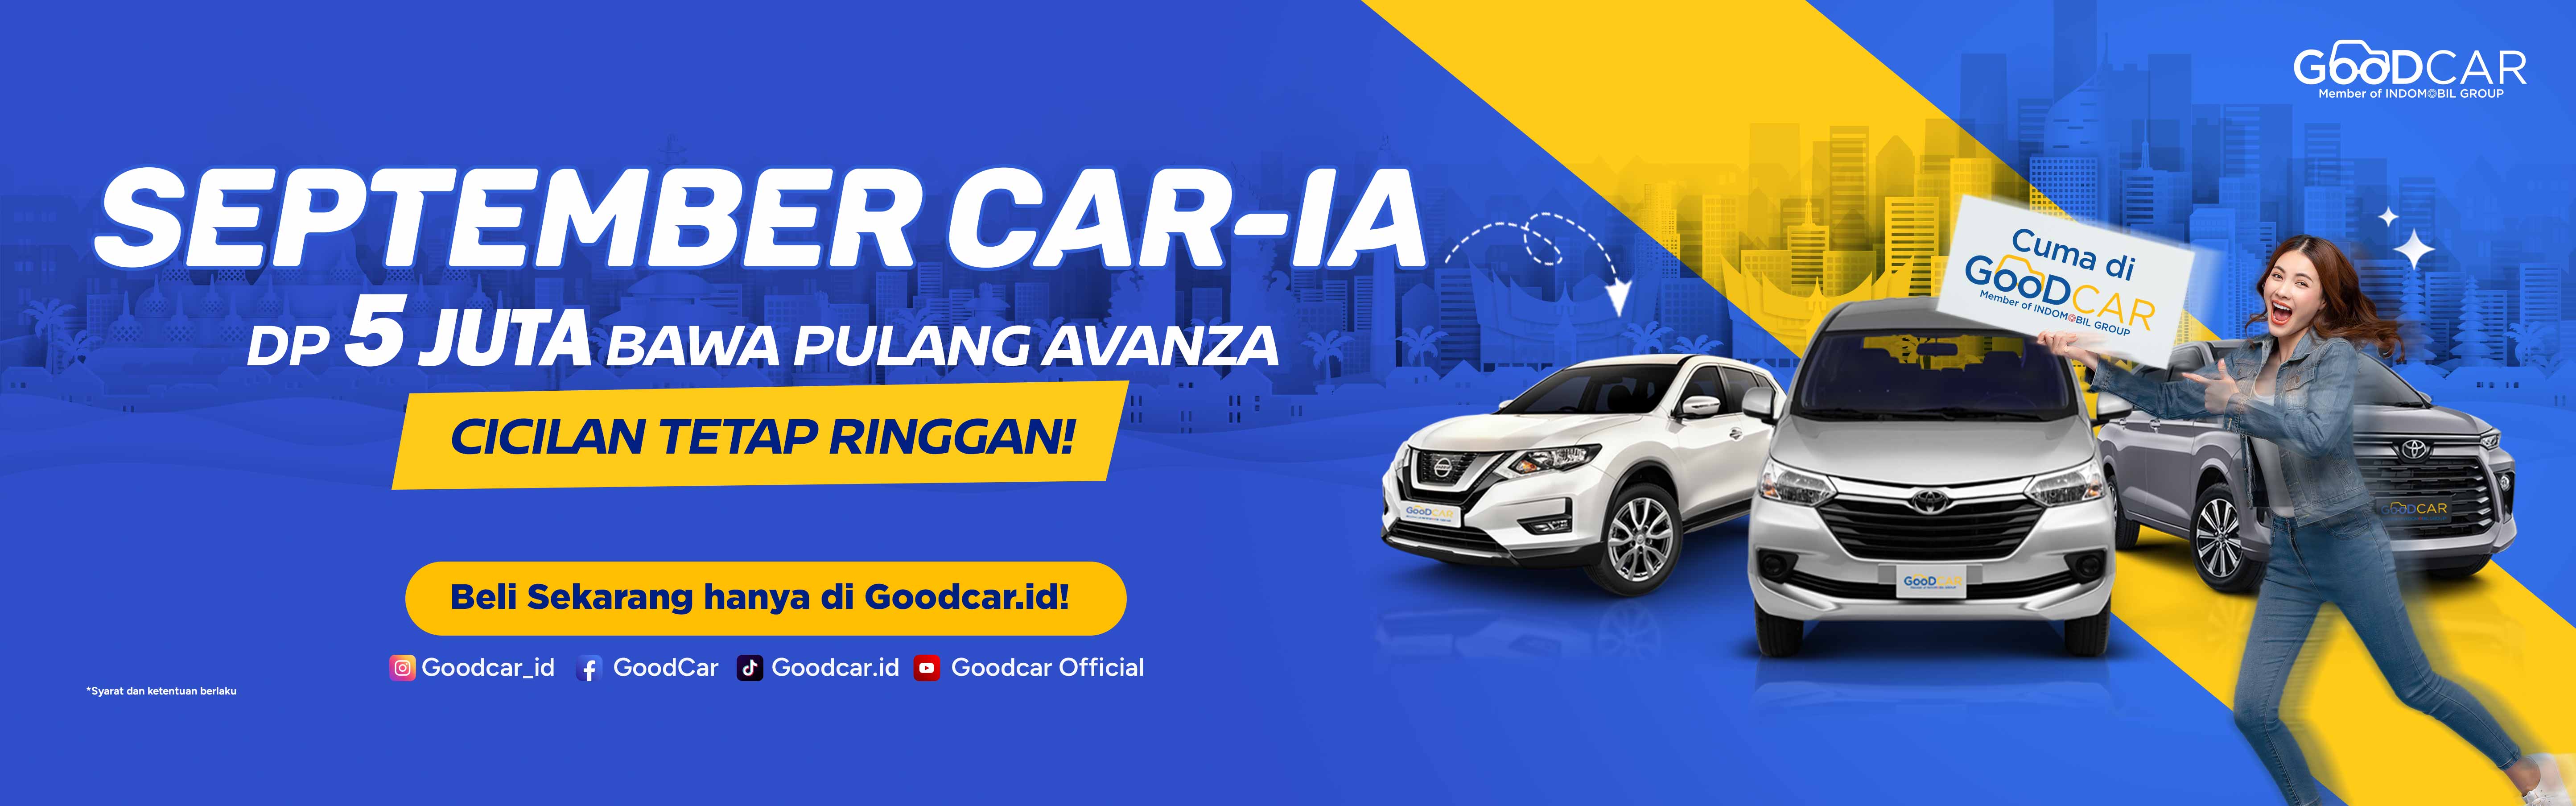 Promo Goodcar Mobil Bekas September Ceria Web Banner